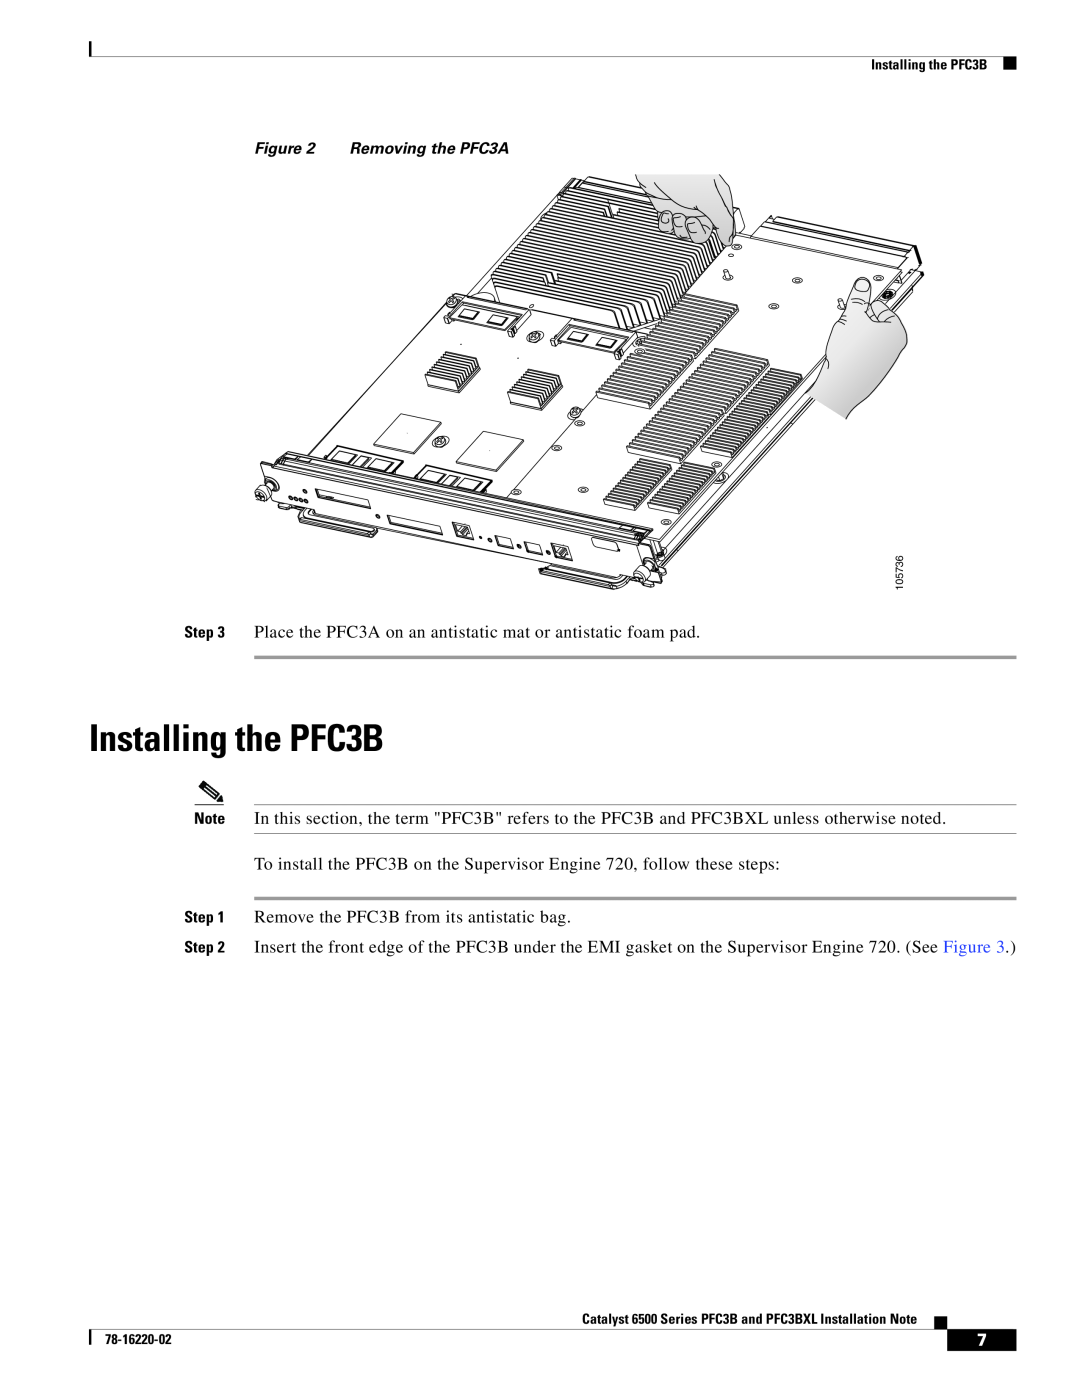 Cisco Systems WS-F6K-PFC3B=, WS-F6K-PFC3BXL= manual Installing the PFC3B, Removing the PFC3A 